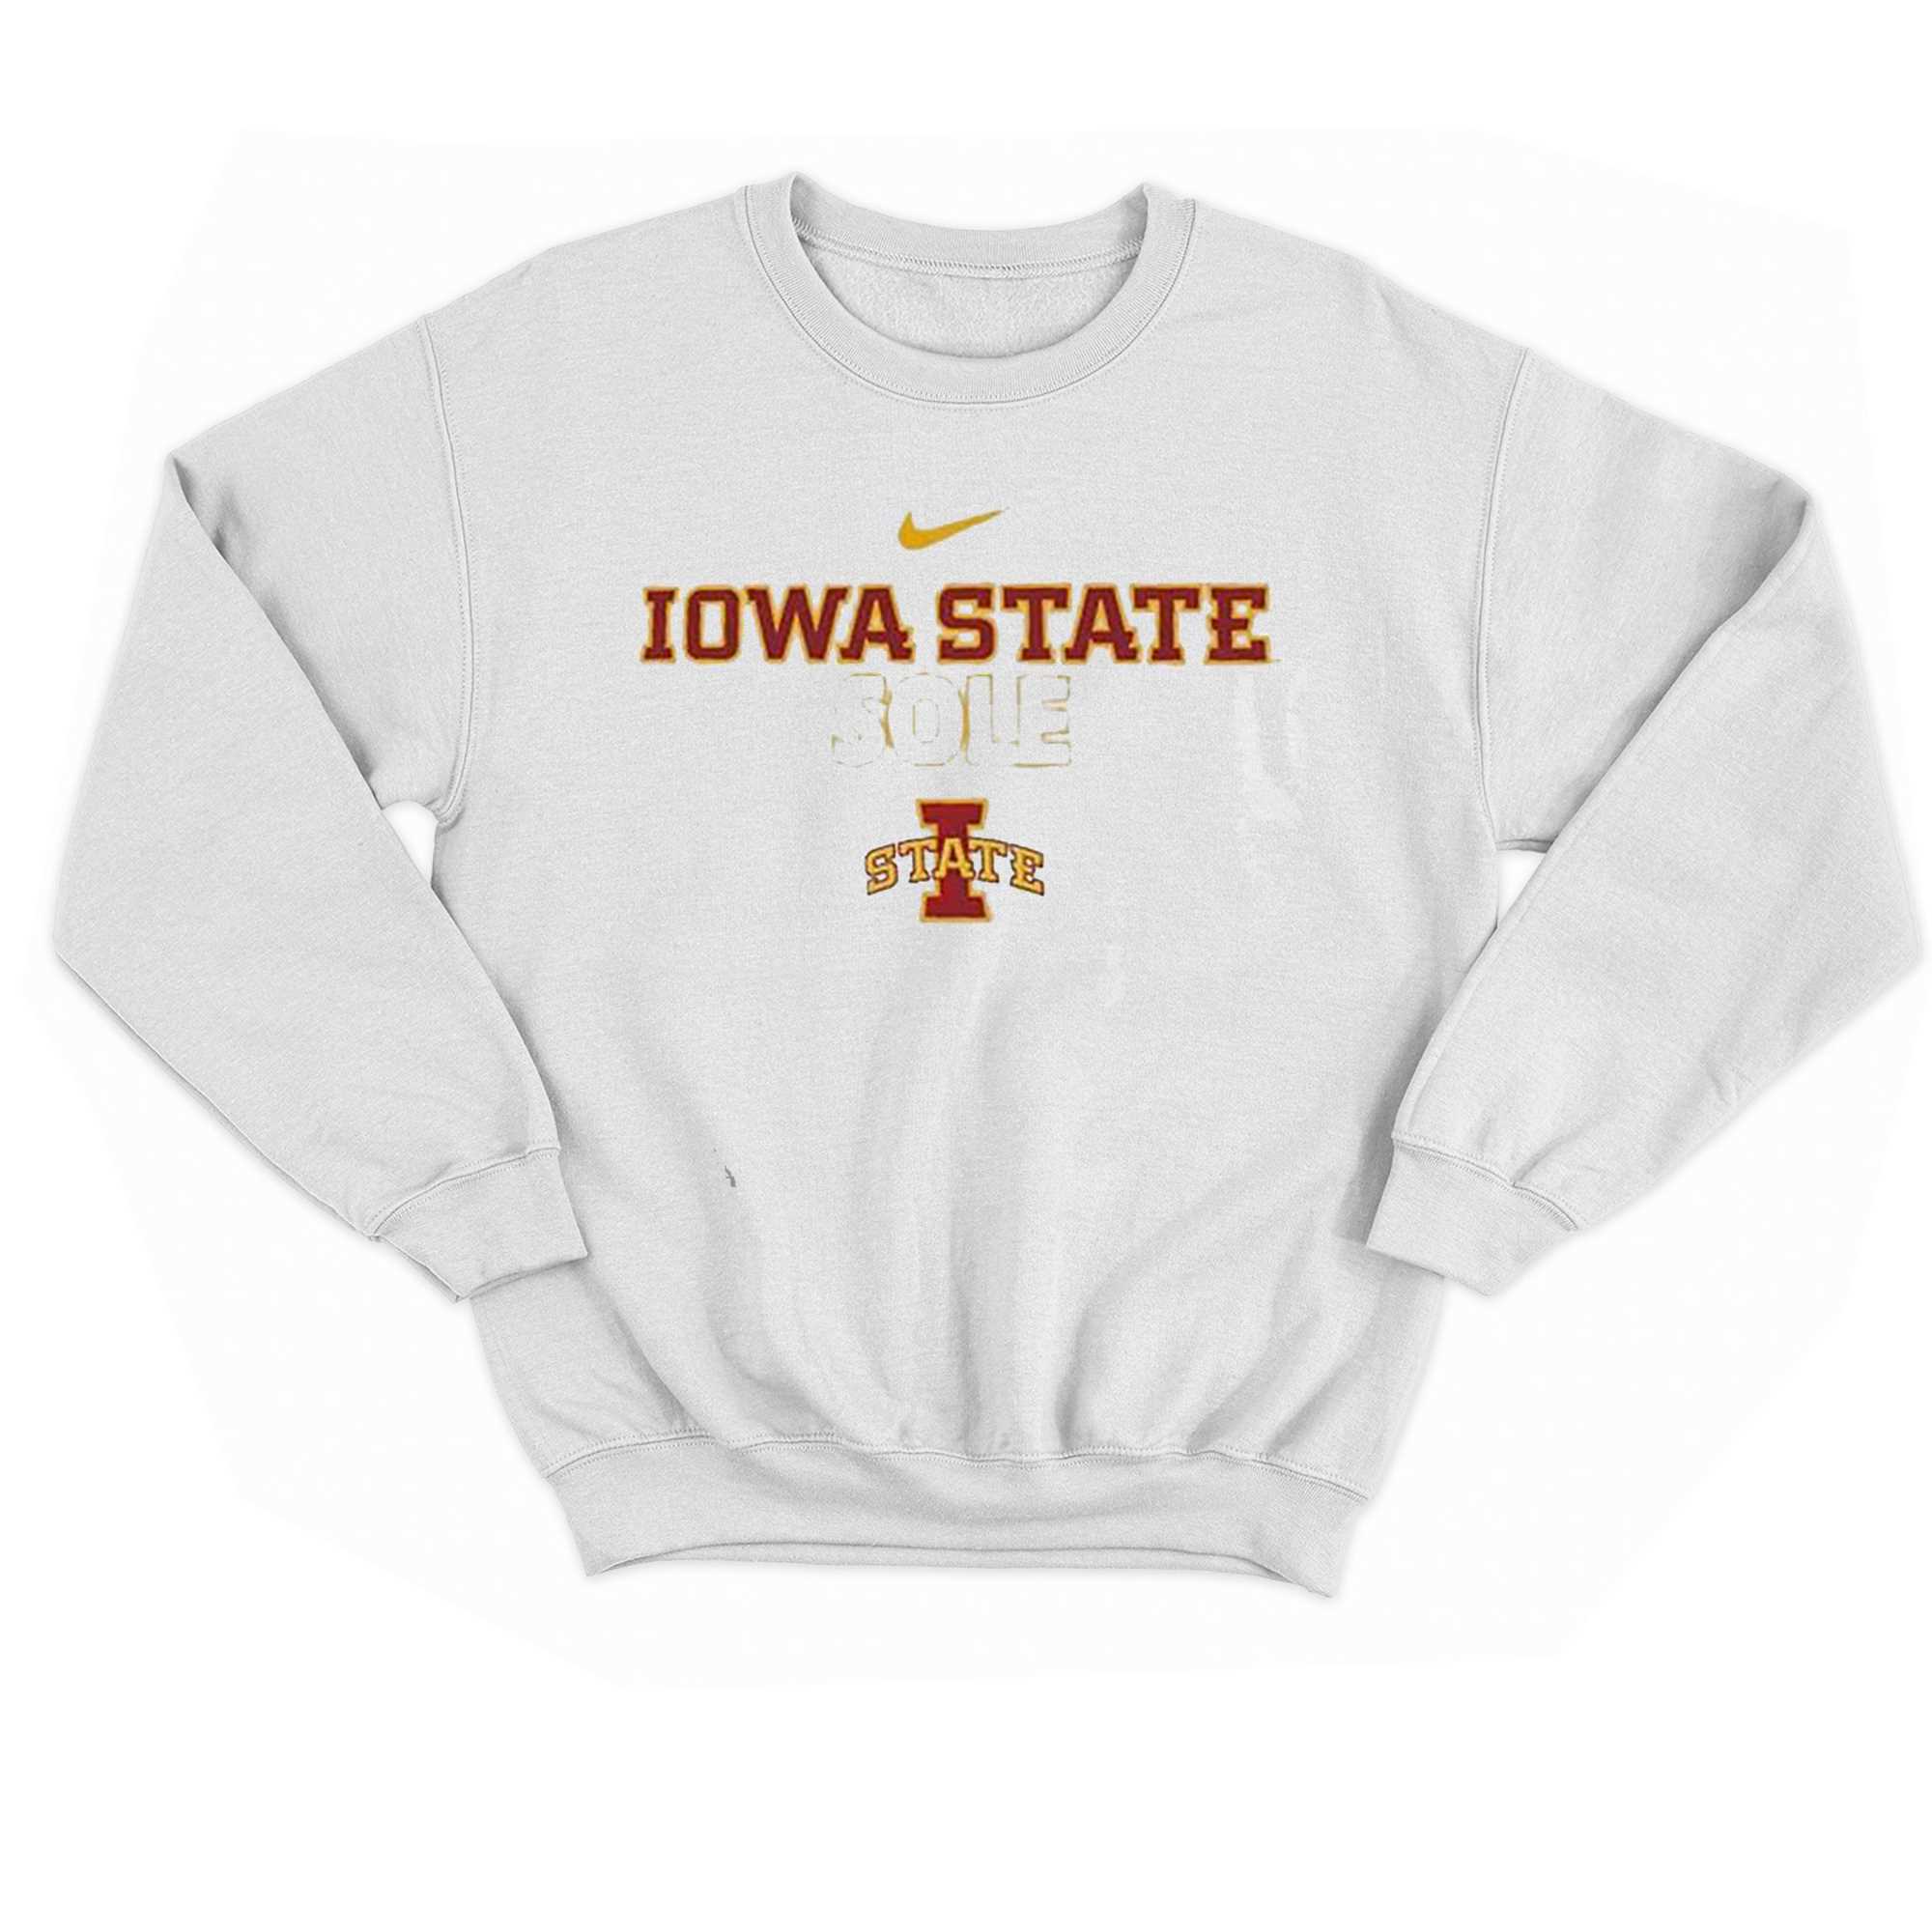 Iowa State Cyclones Basketball Nike Iowa State Sole Shirt 